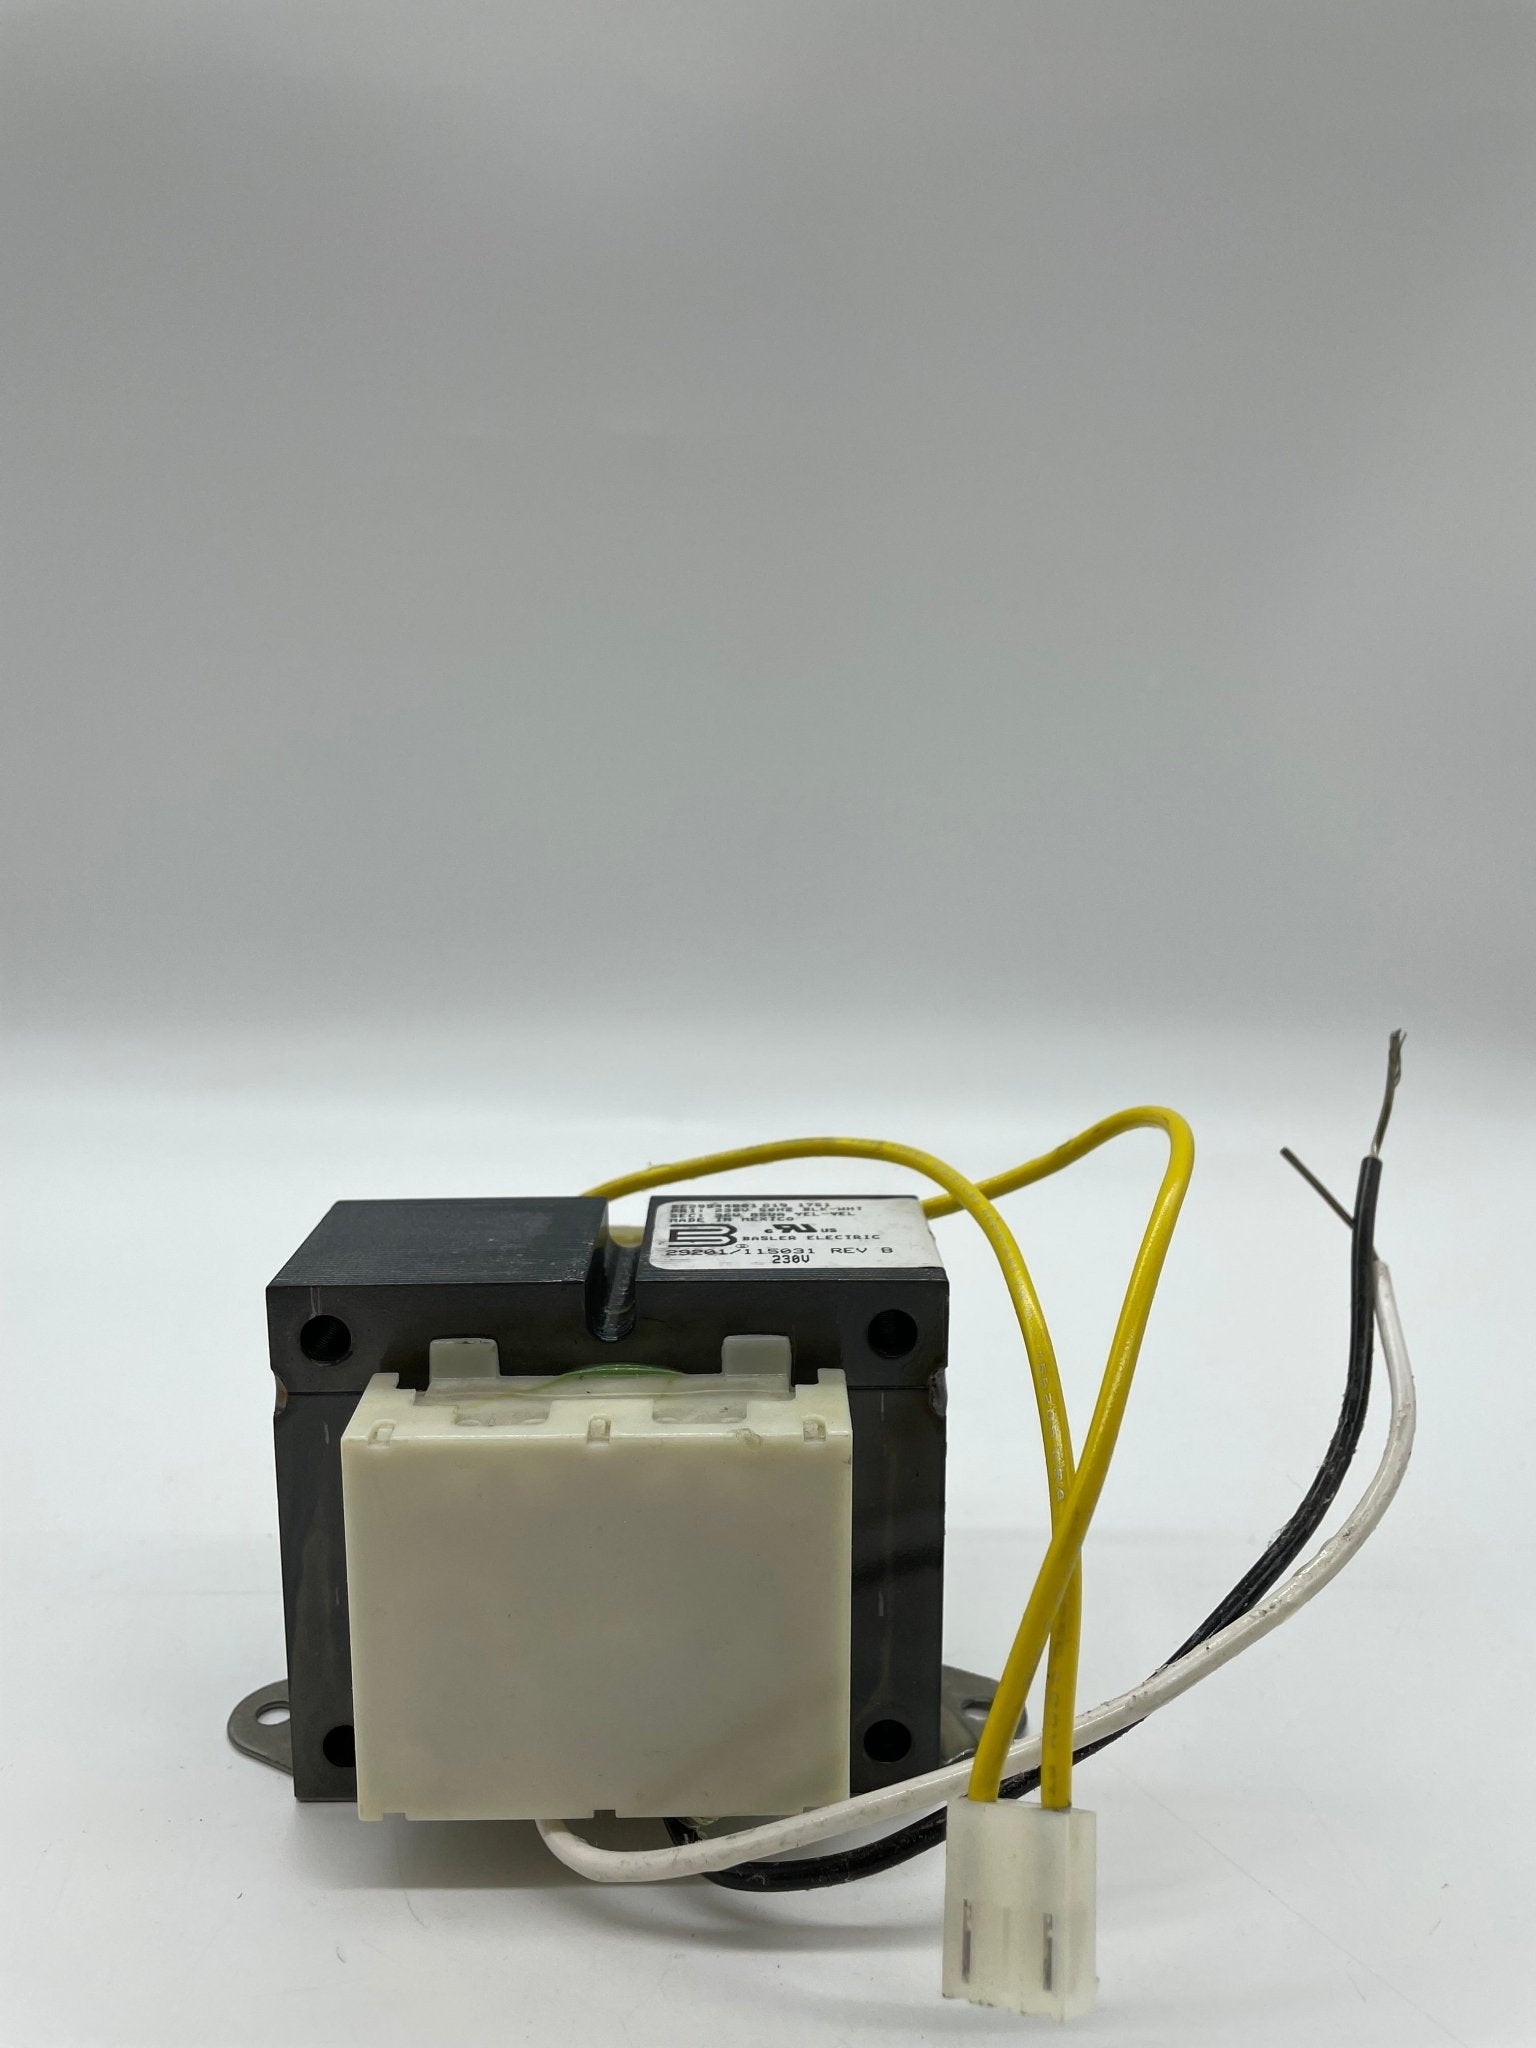 Firelite ECC-50DAE - The Fire Alarm Supplier